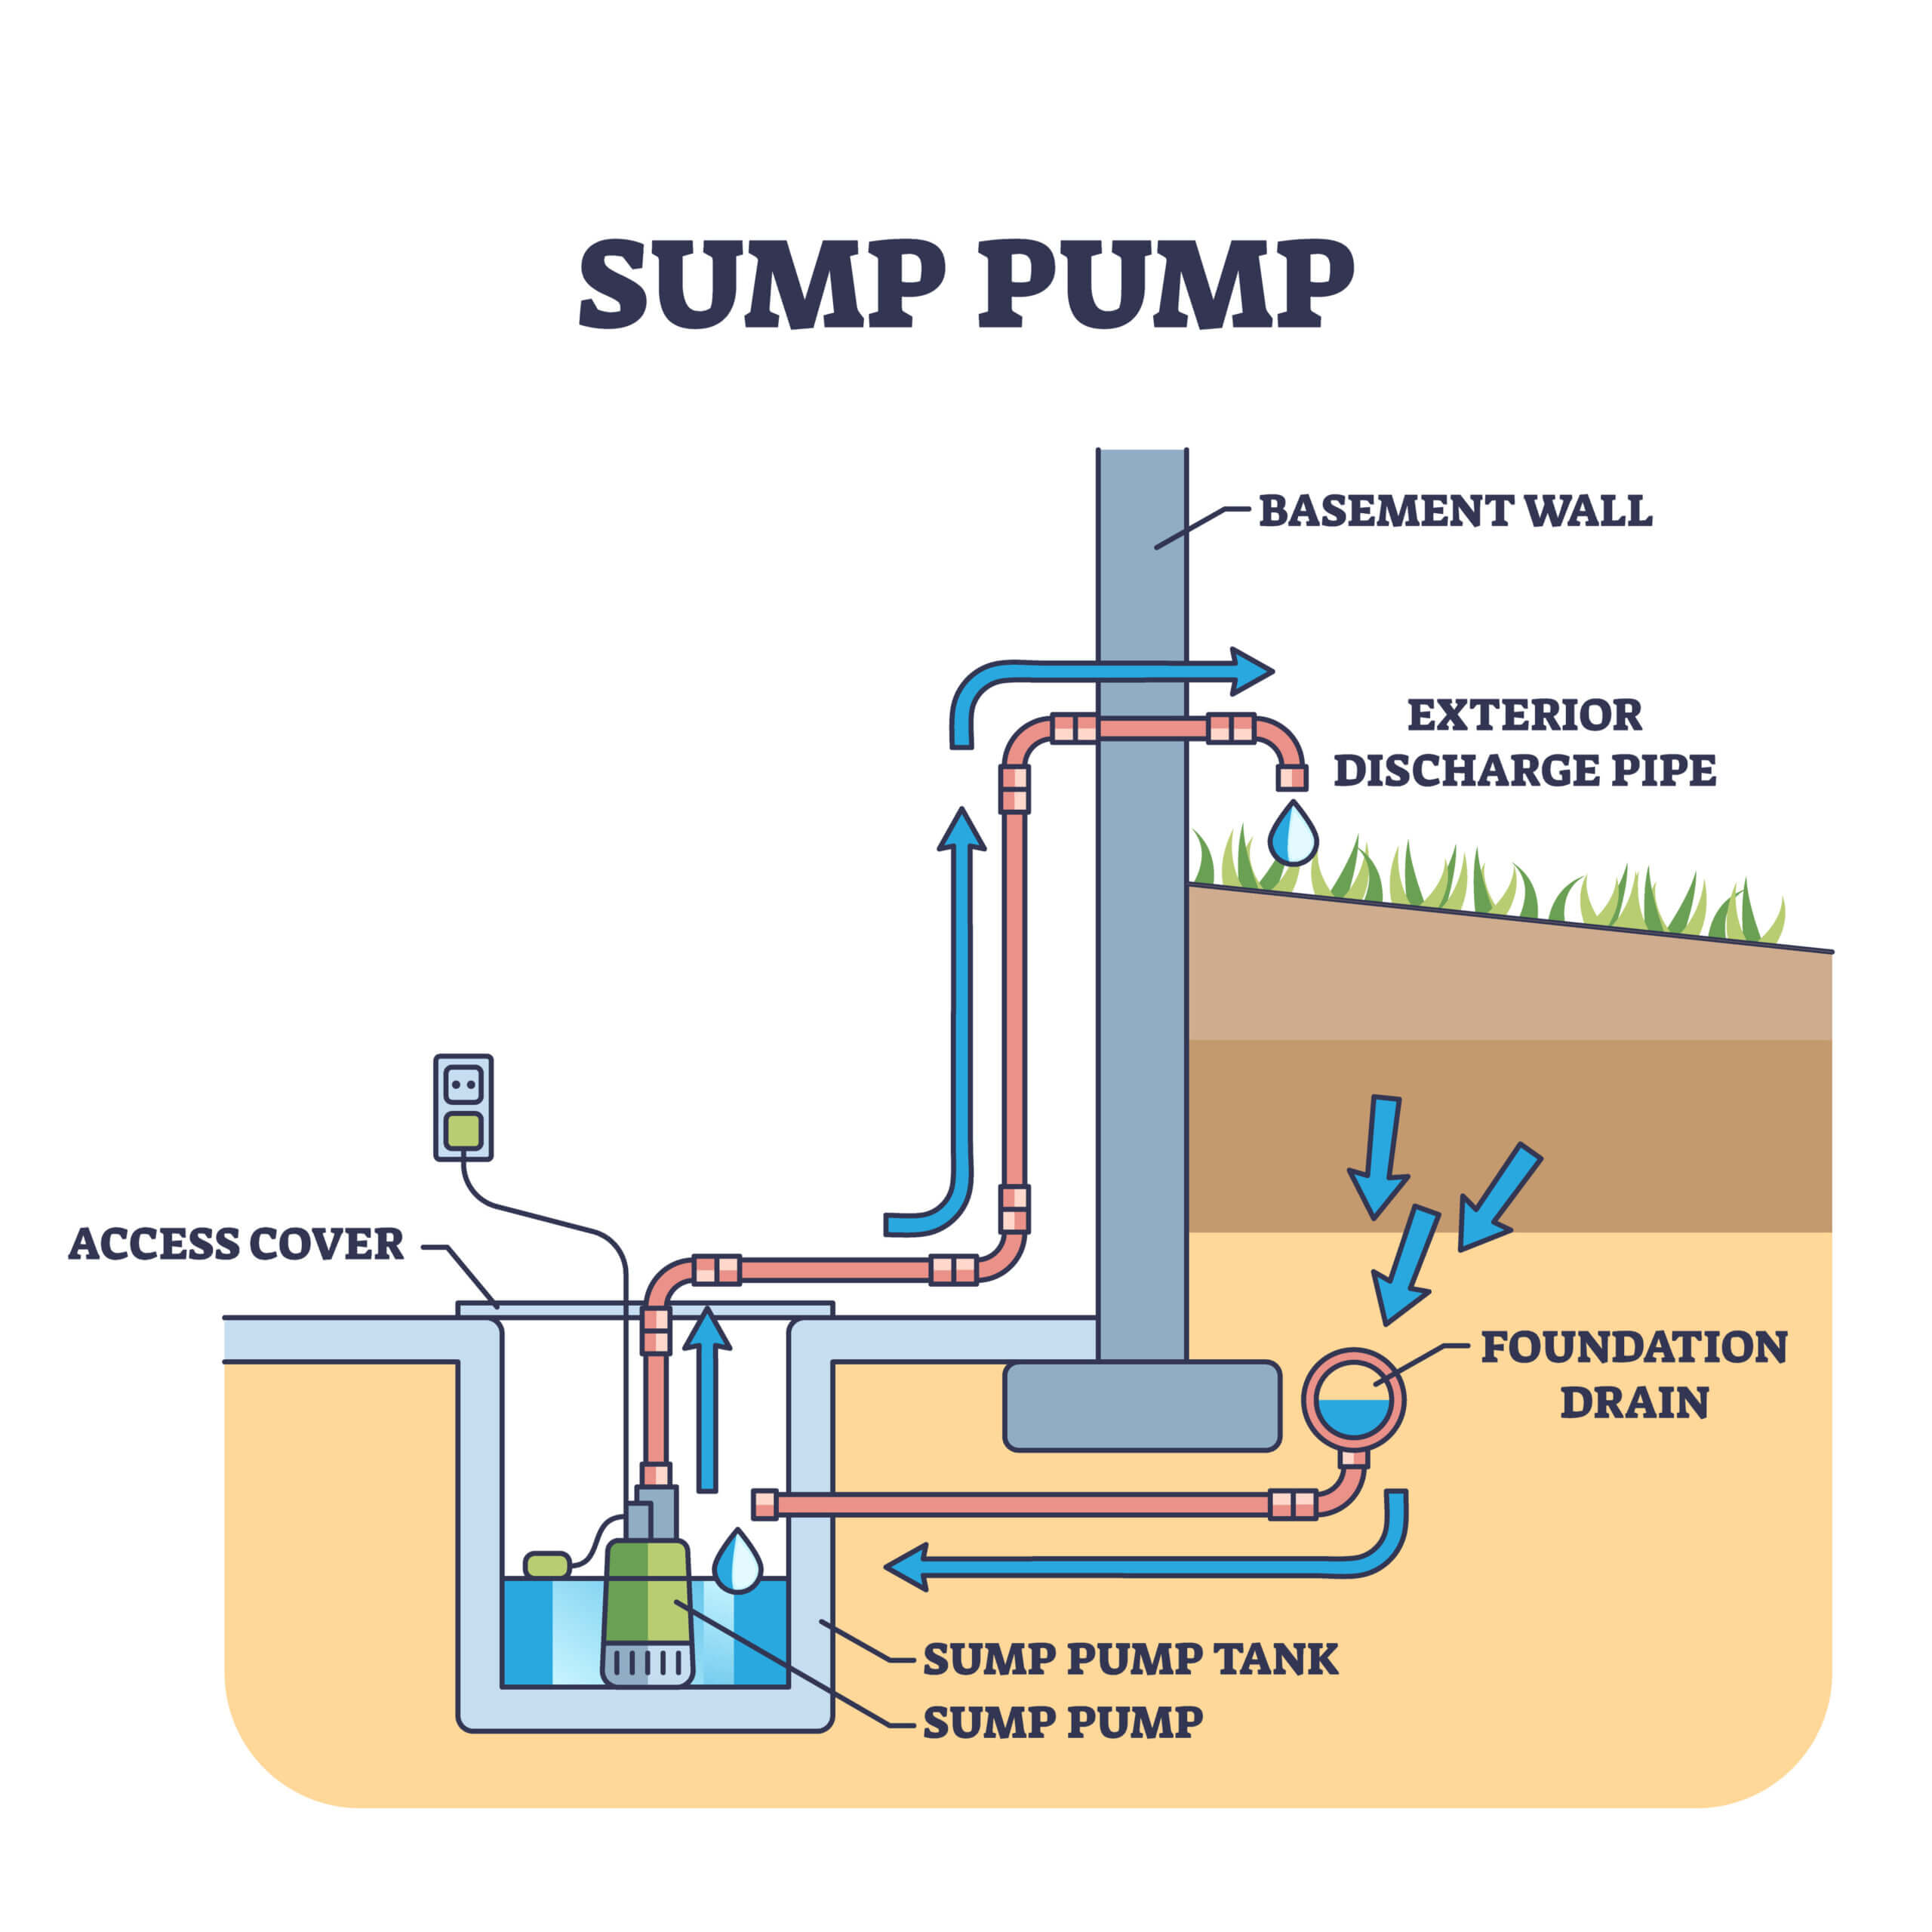 Sump pump illustration